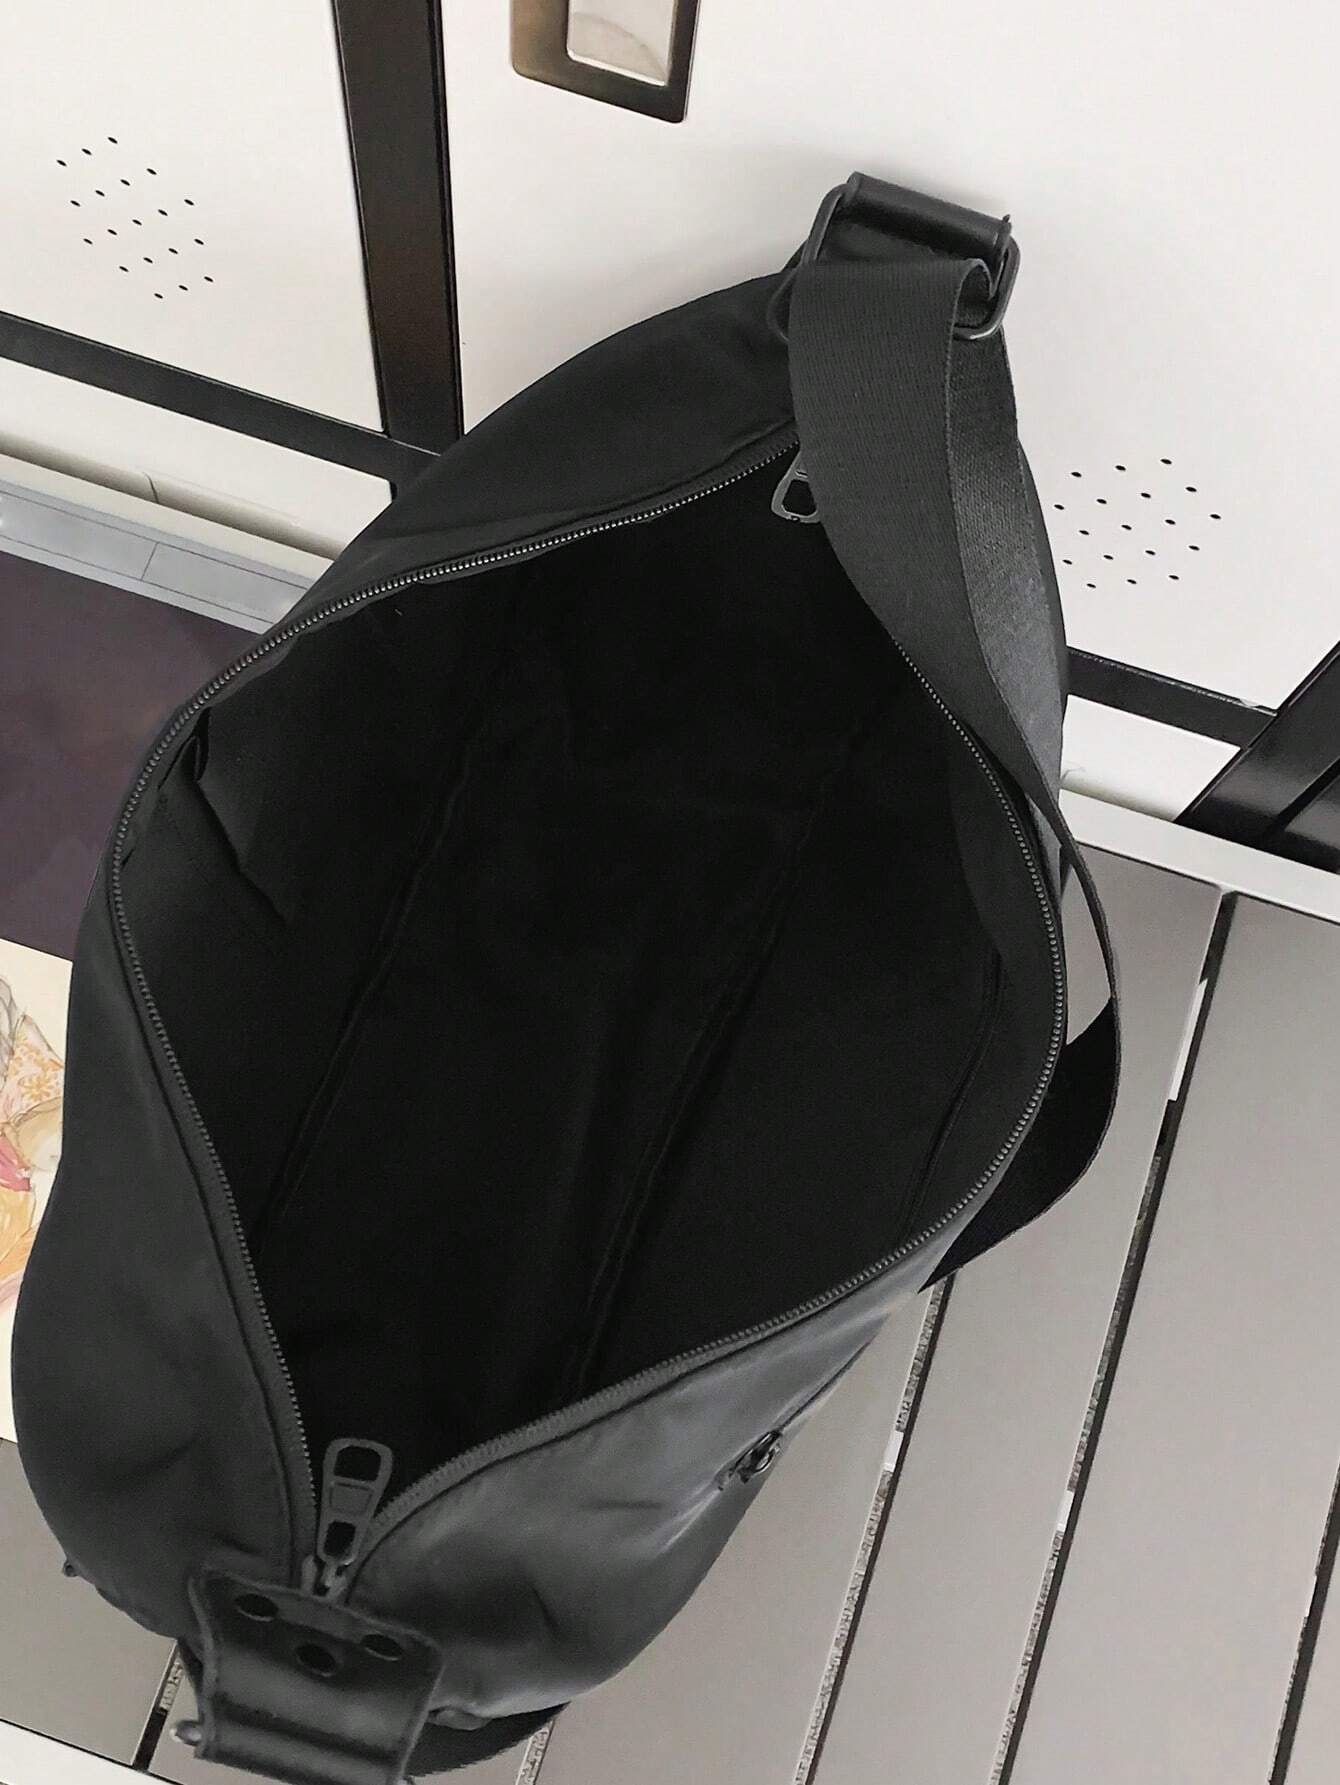 Polyamide Hobo Bag Zipper Adjustable Strap Black